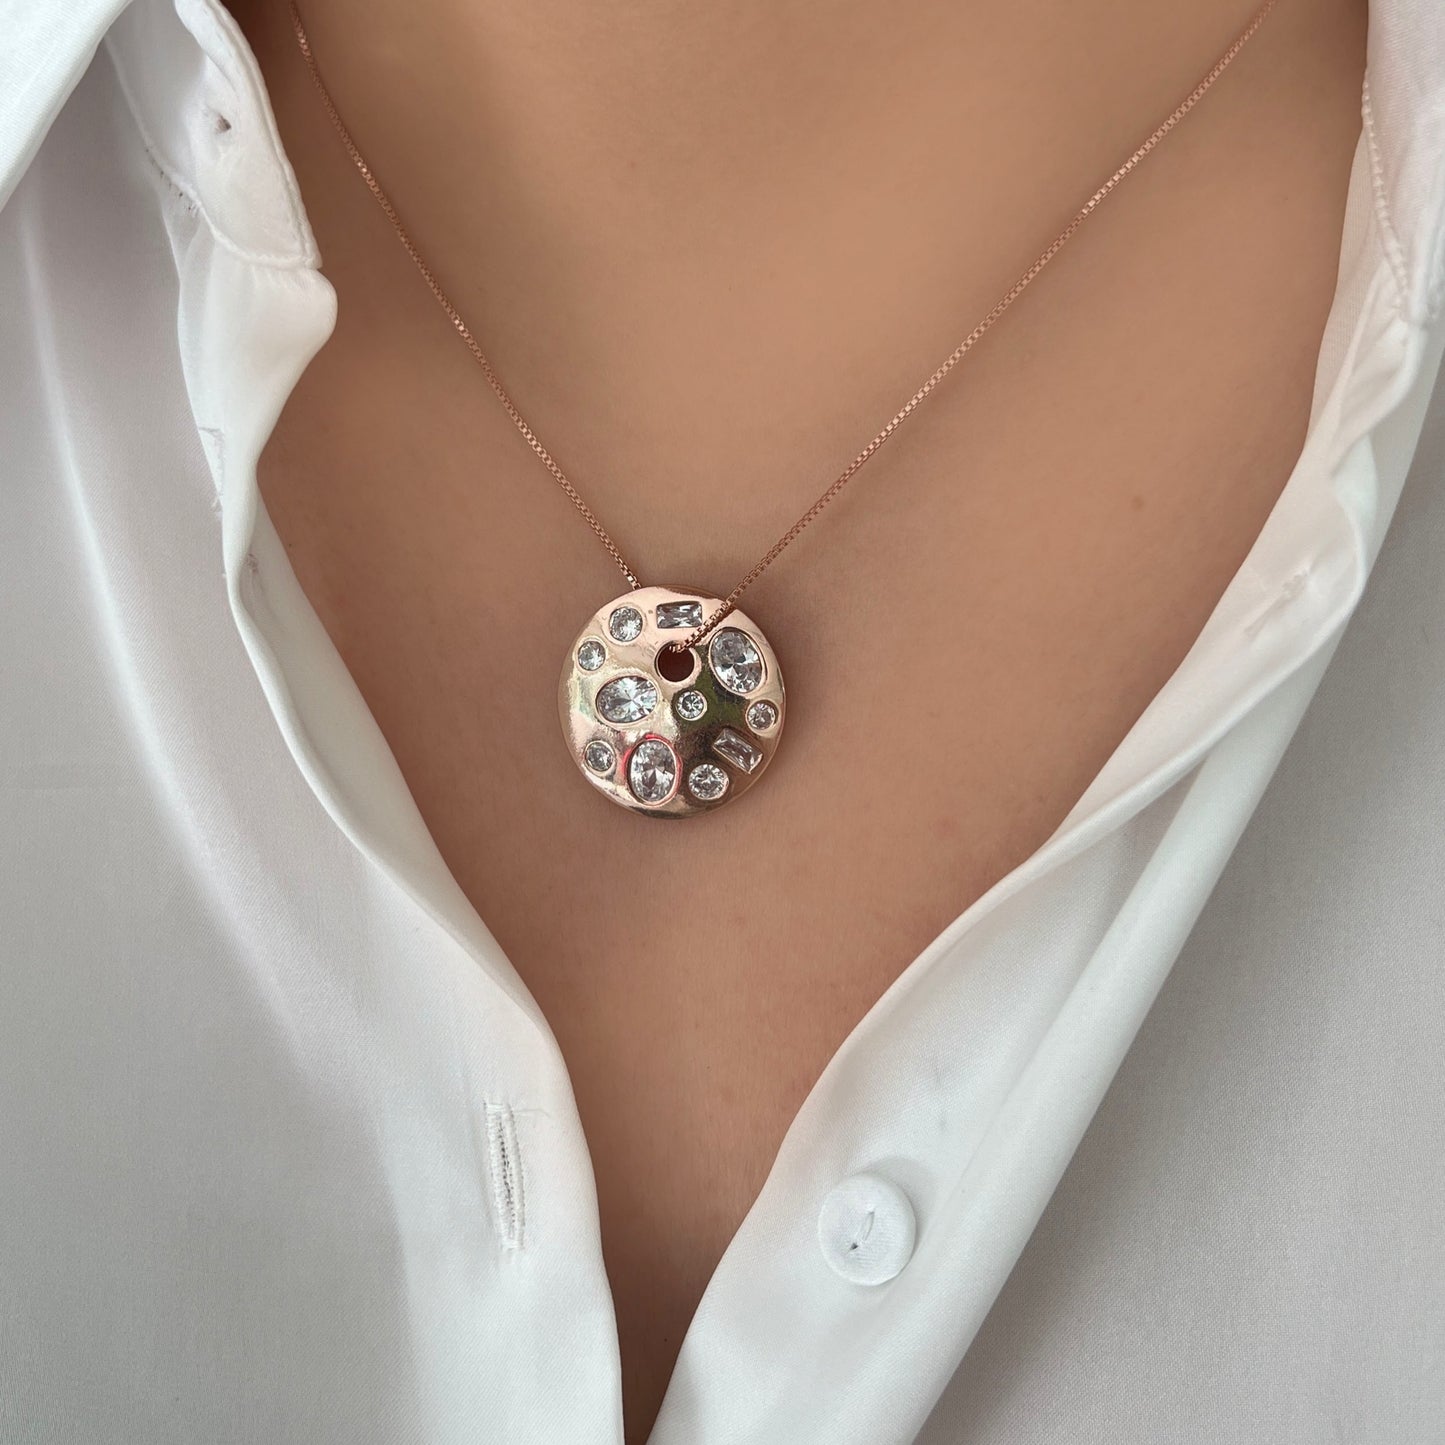 Circular necklace with zircons (894)